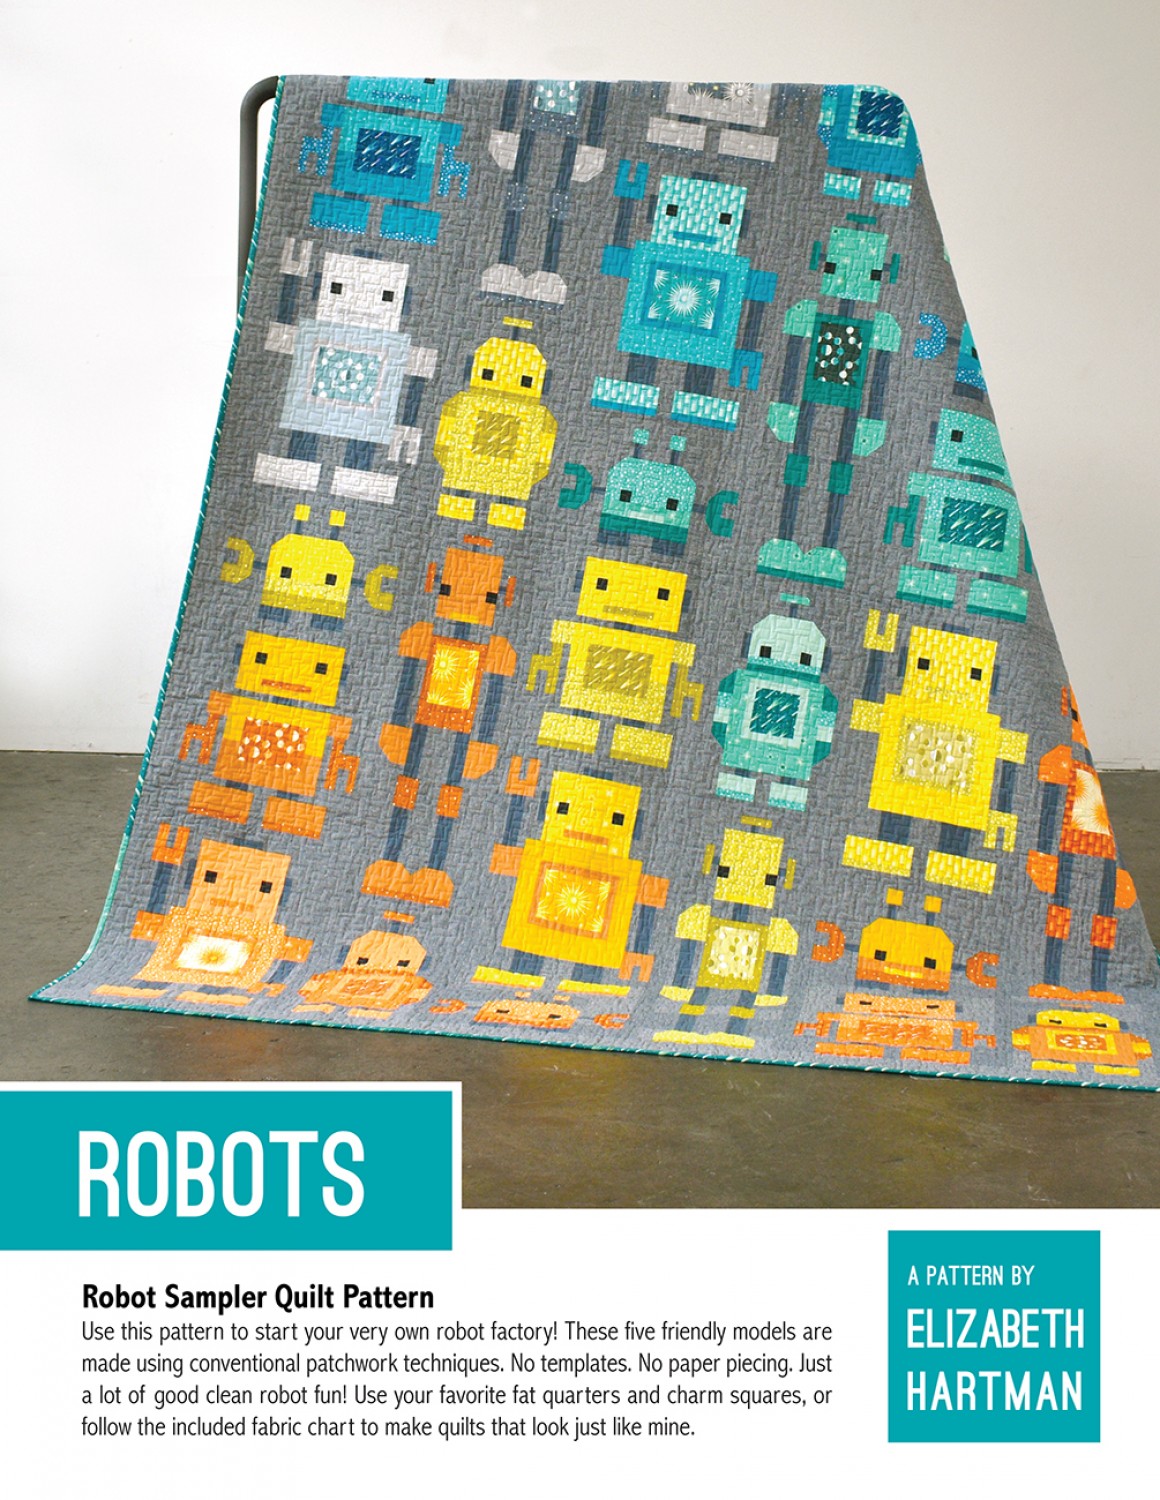 Robot Sampler Quilt Pattern by Elizabeth Hartman